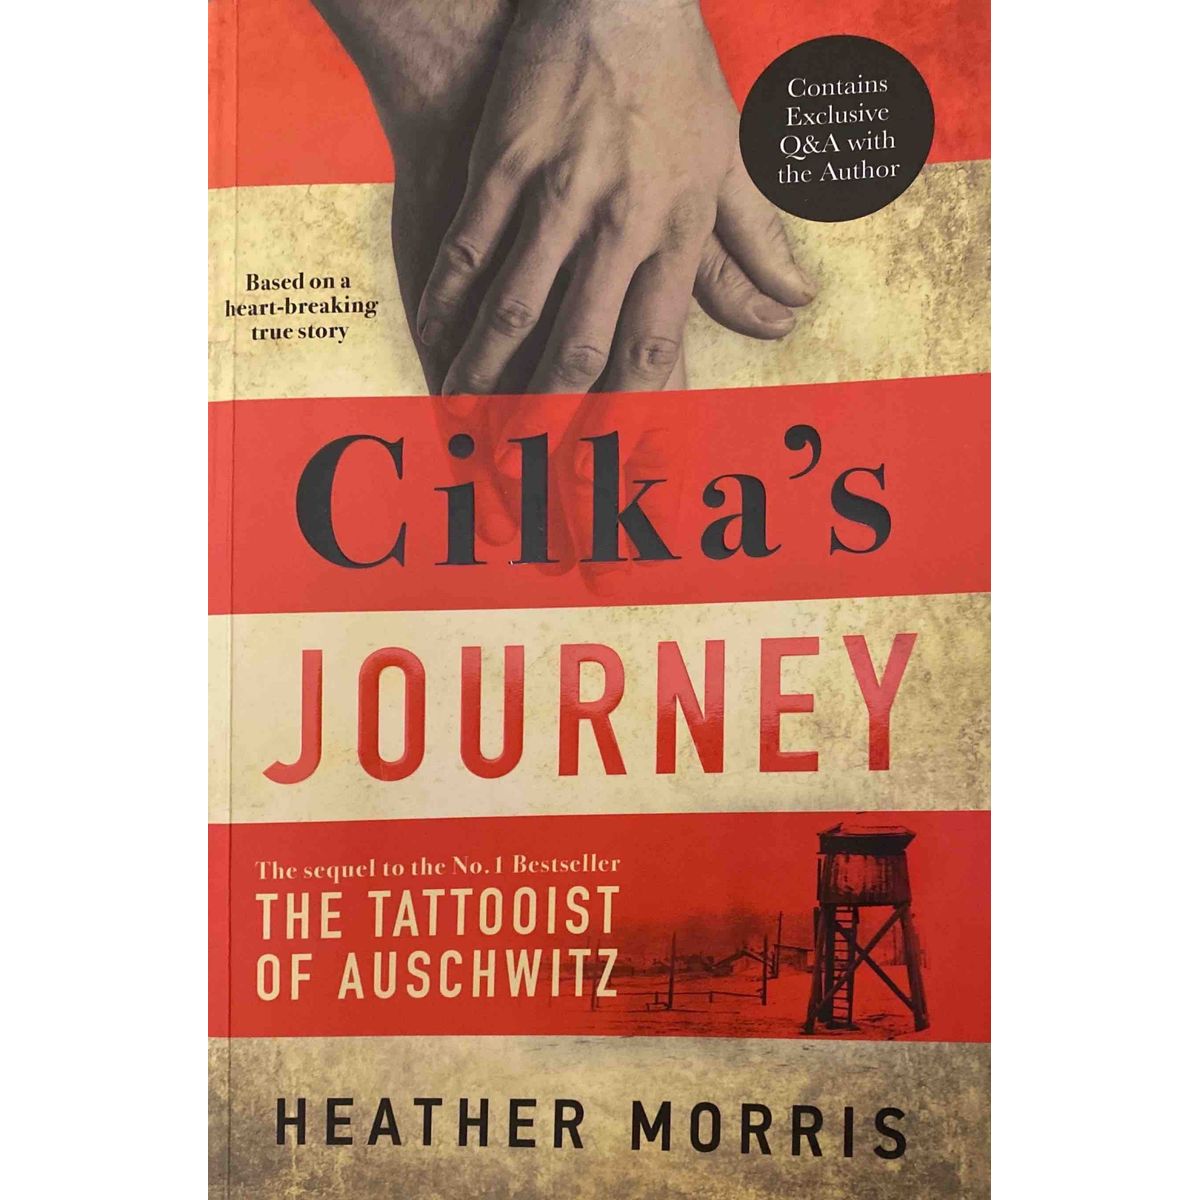 ISBN: 9781785769139 / 1785769138 - Cilka's Journey by Heather Morris [2019]